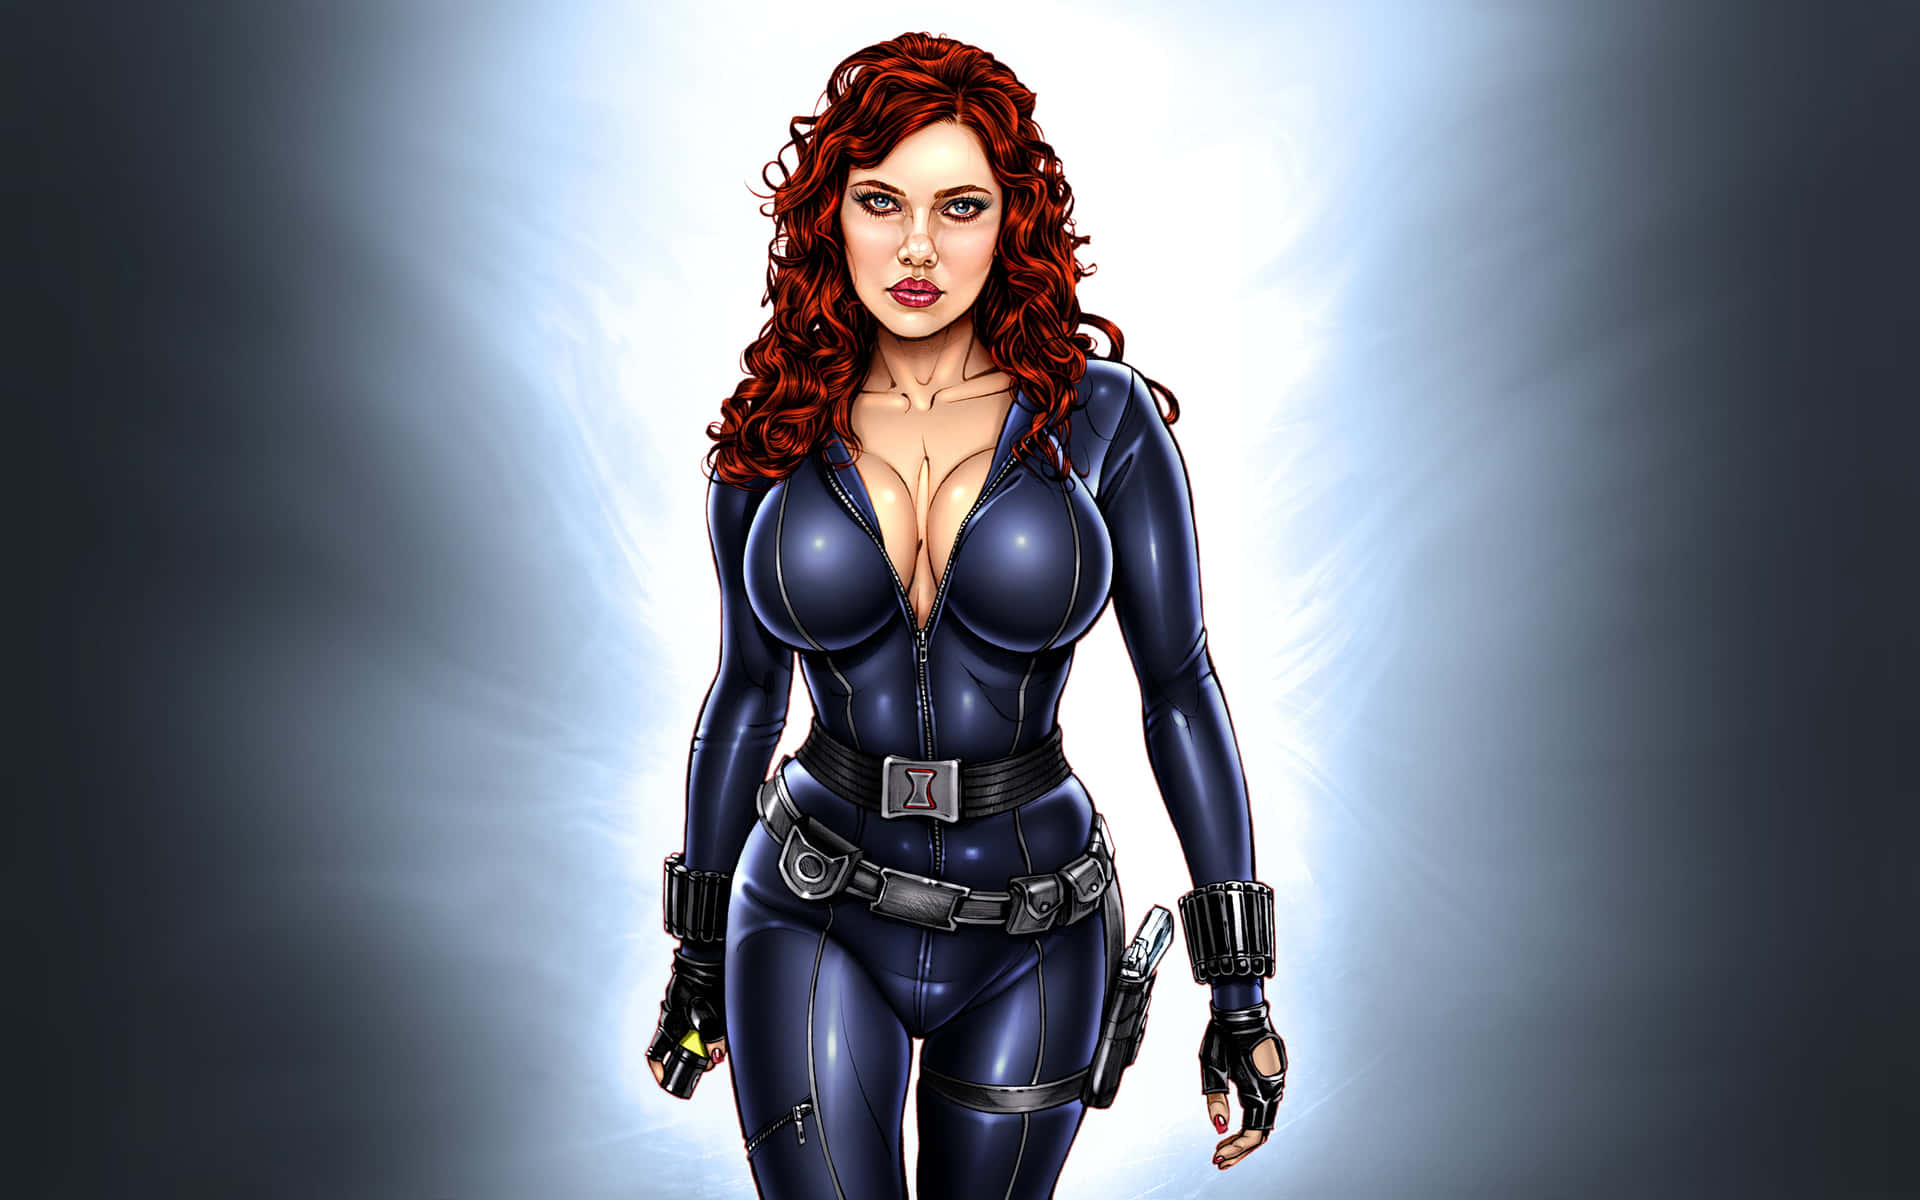 Scarlett Johansson as Black Widow in the Marvel Cinematic Universe